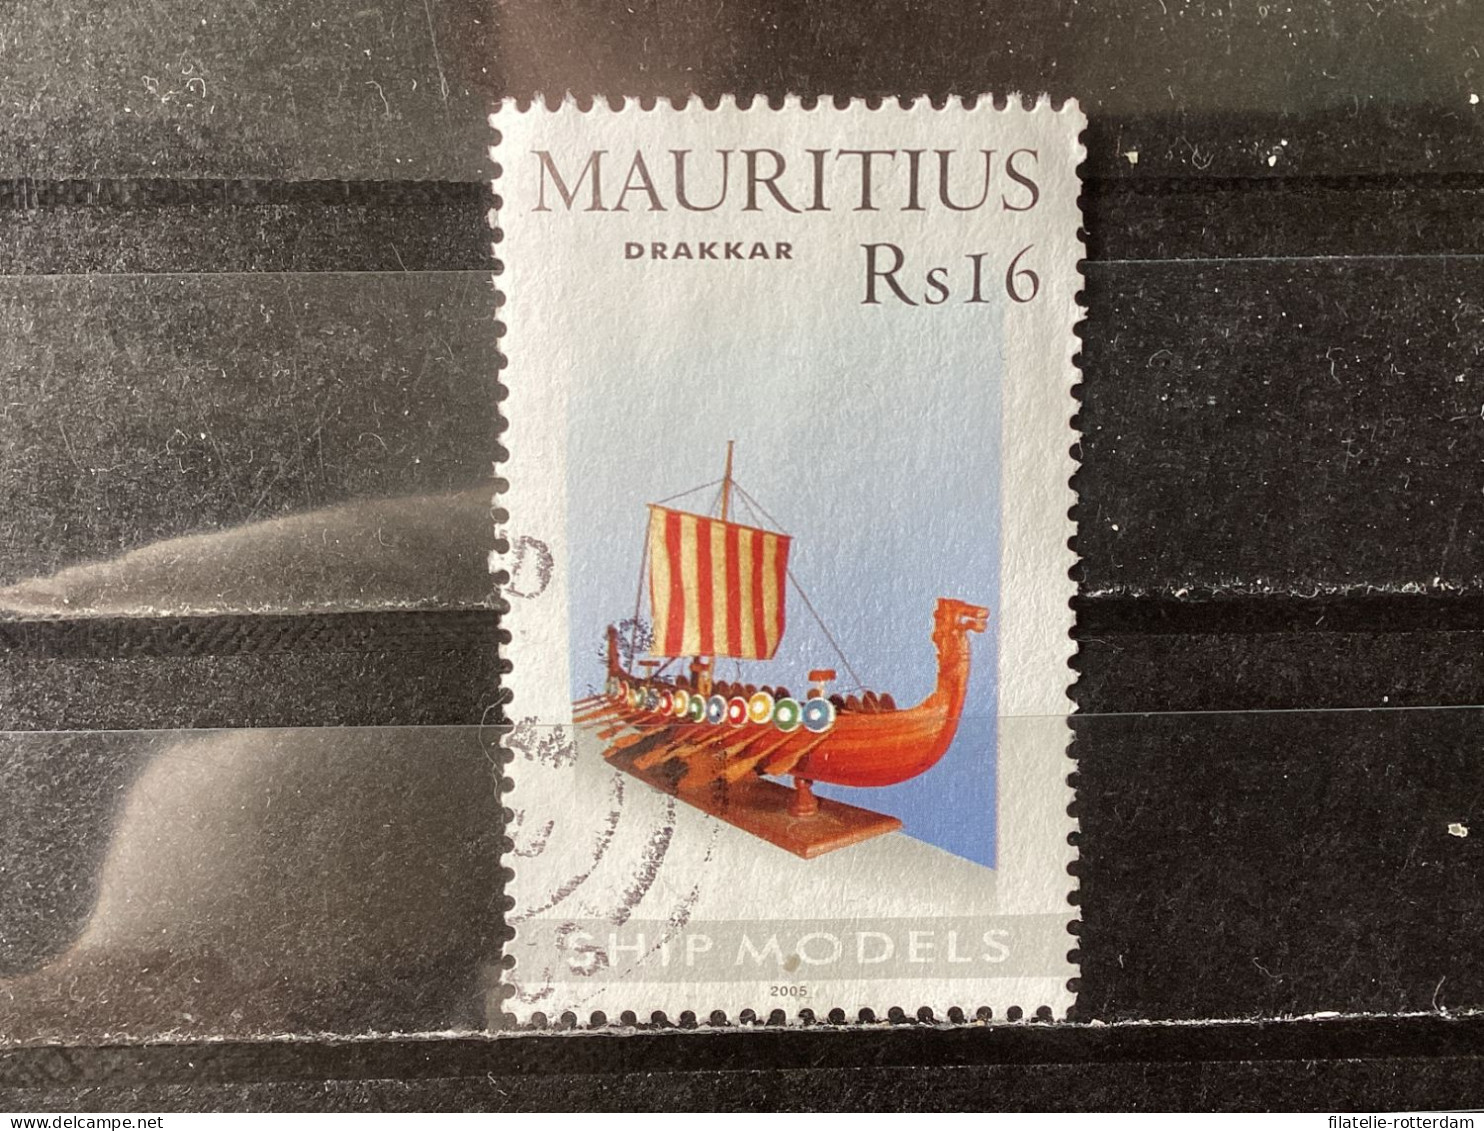 Mauritius - Ship Models (16) 2005 - Mauritius (1968-...)